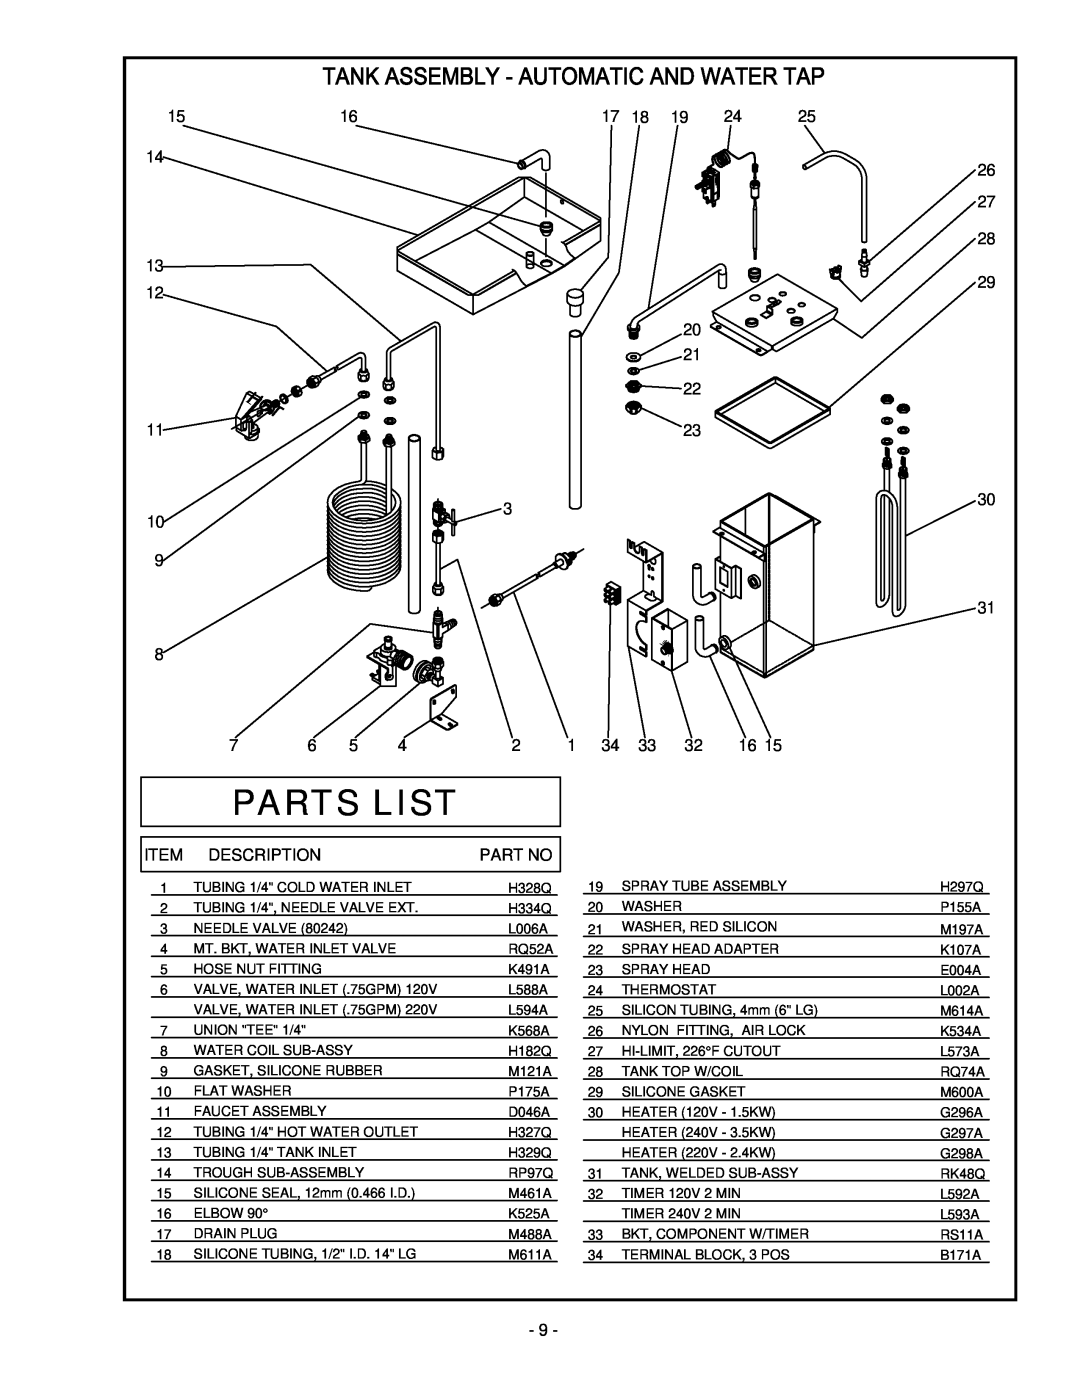 Cecilware 2000 manual Parts List, 1516 14 13 12 11 